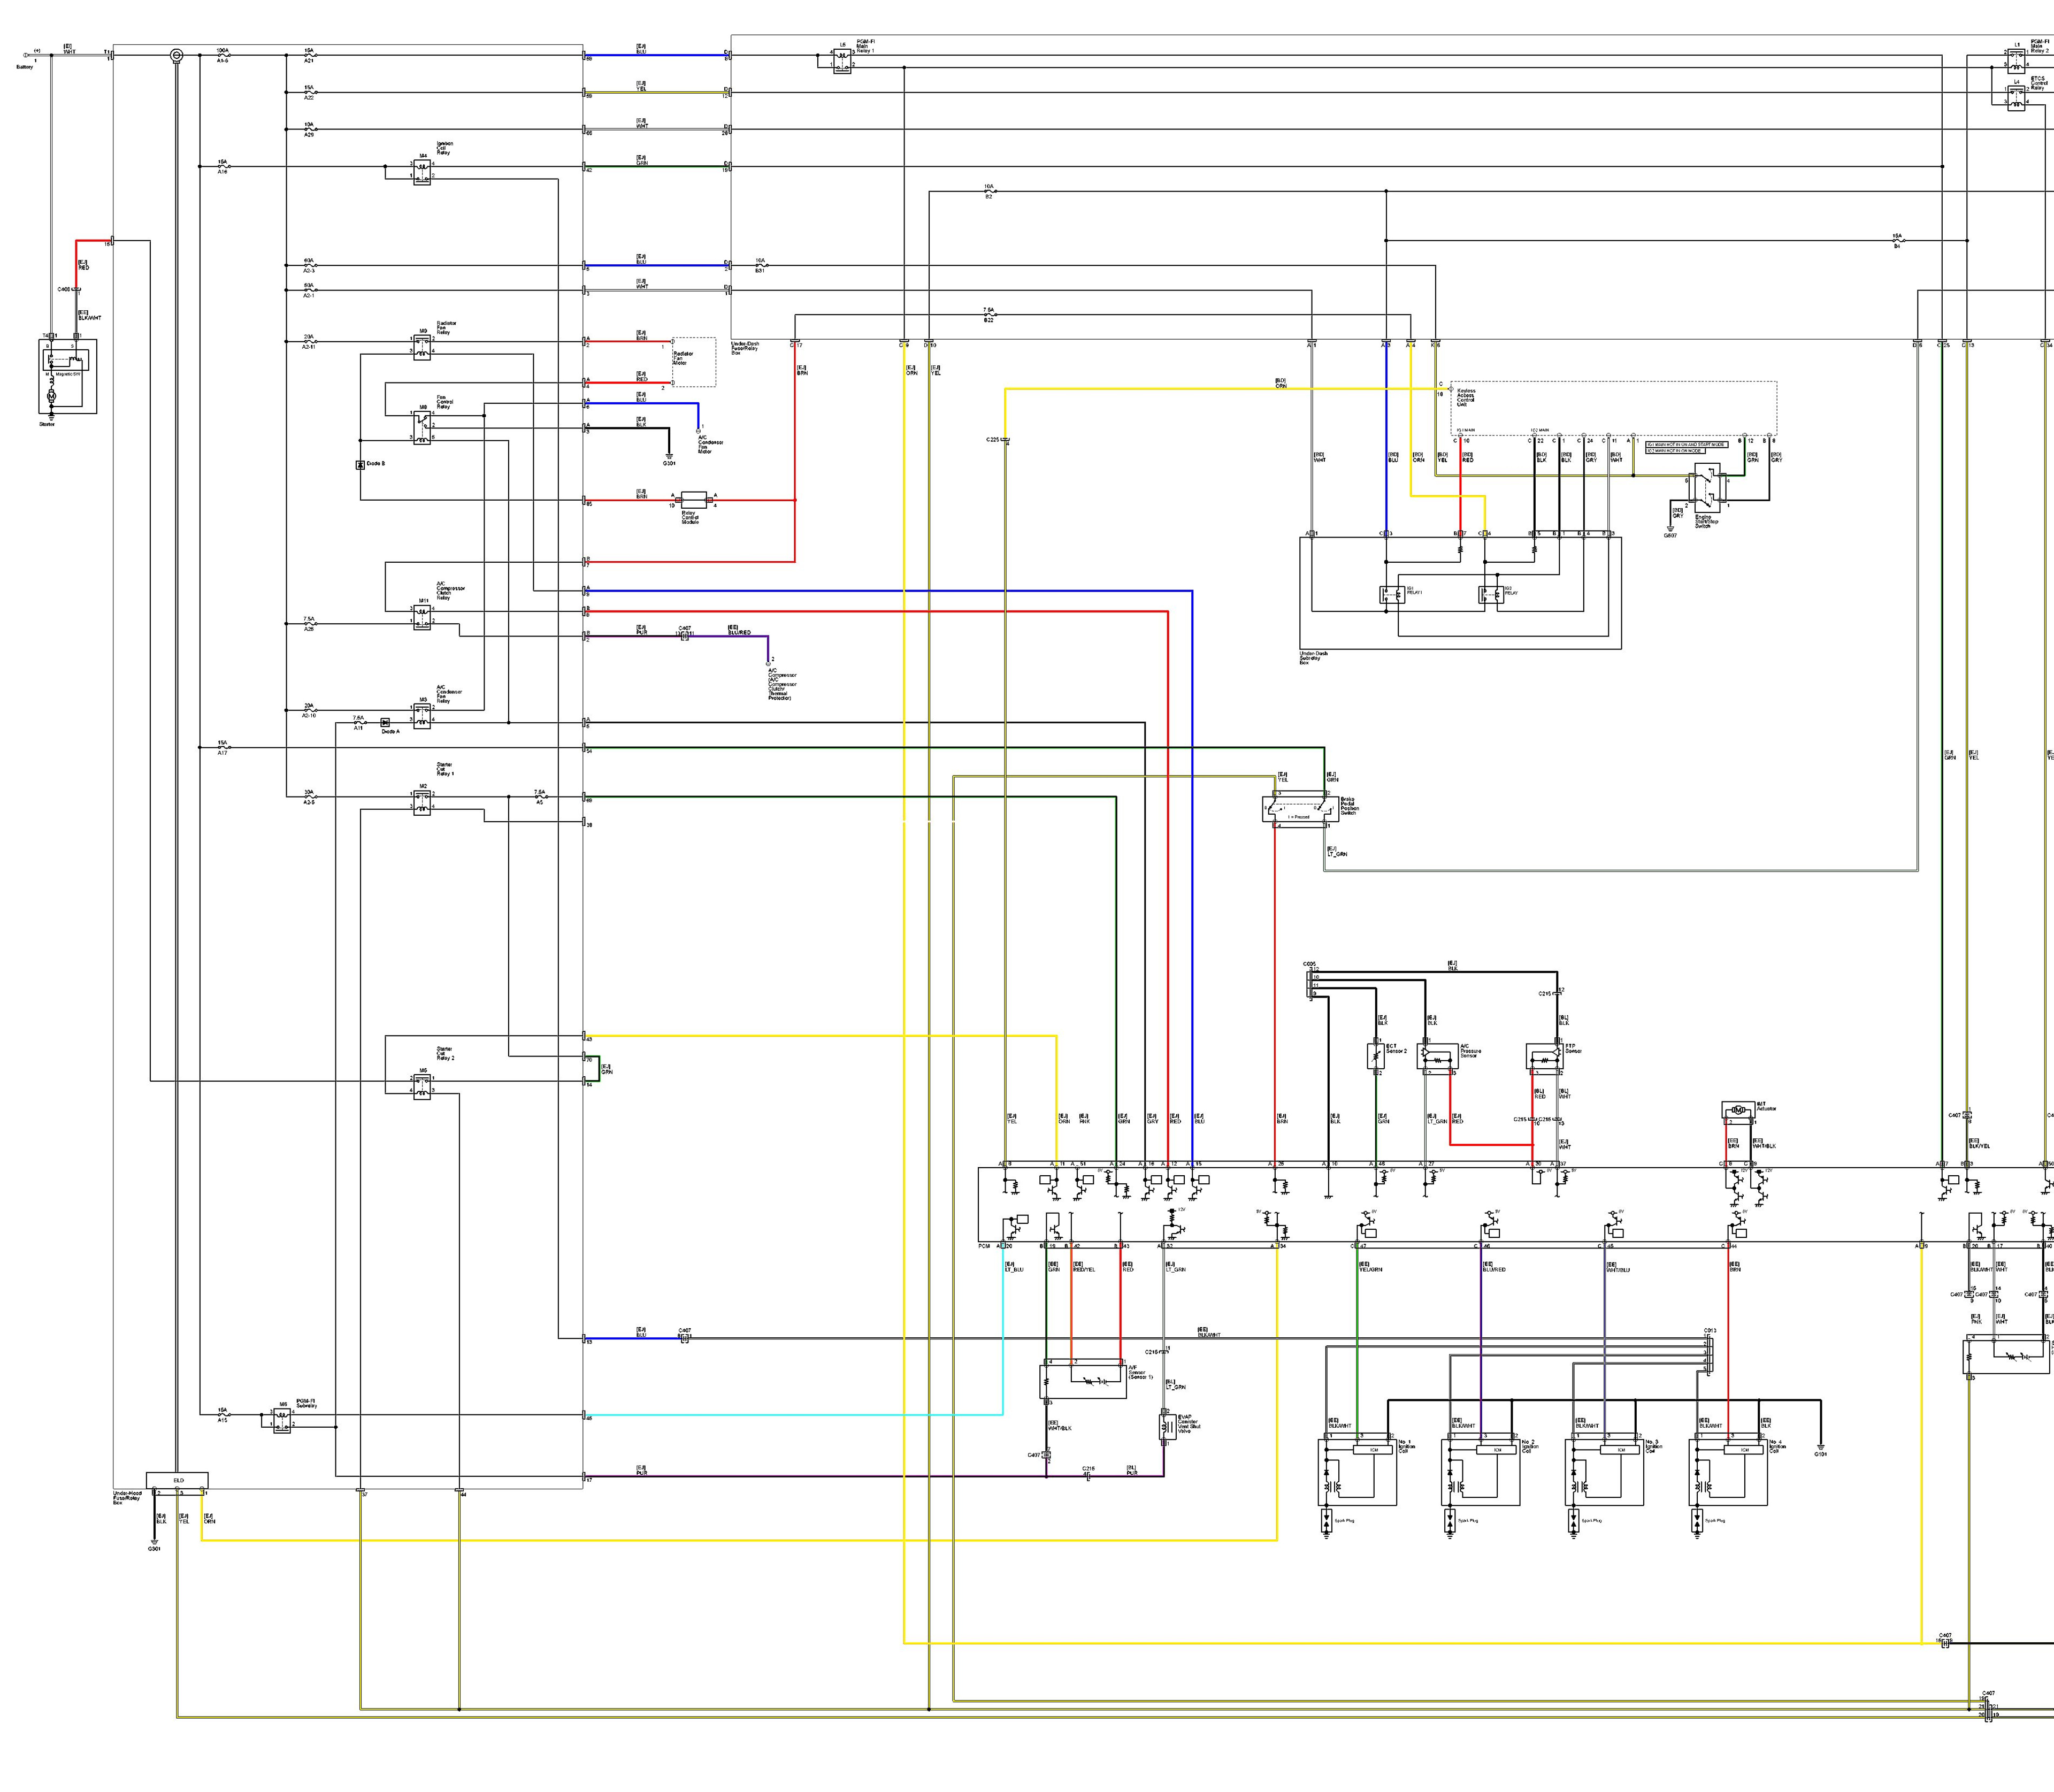 2001 Ford Escort wiring diagrams sample